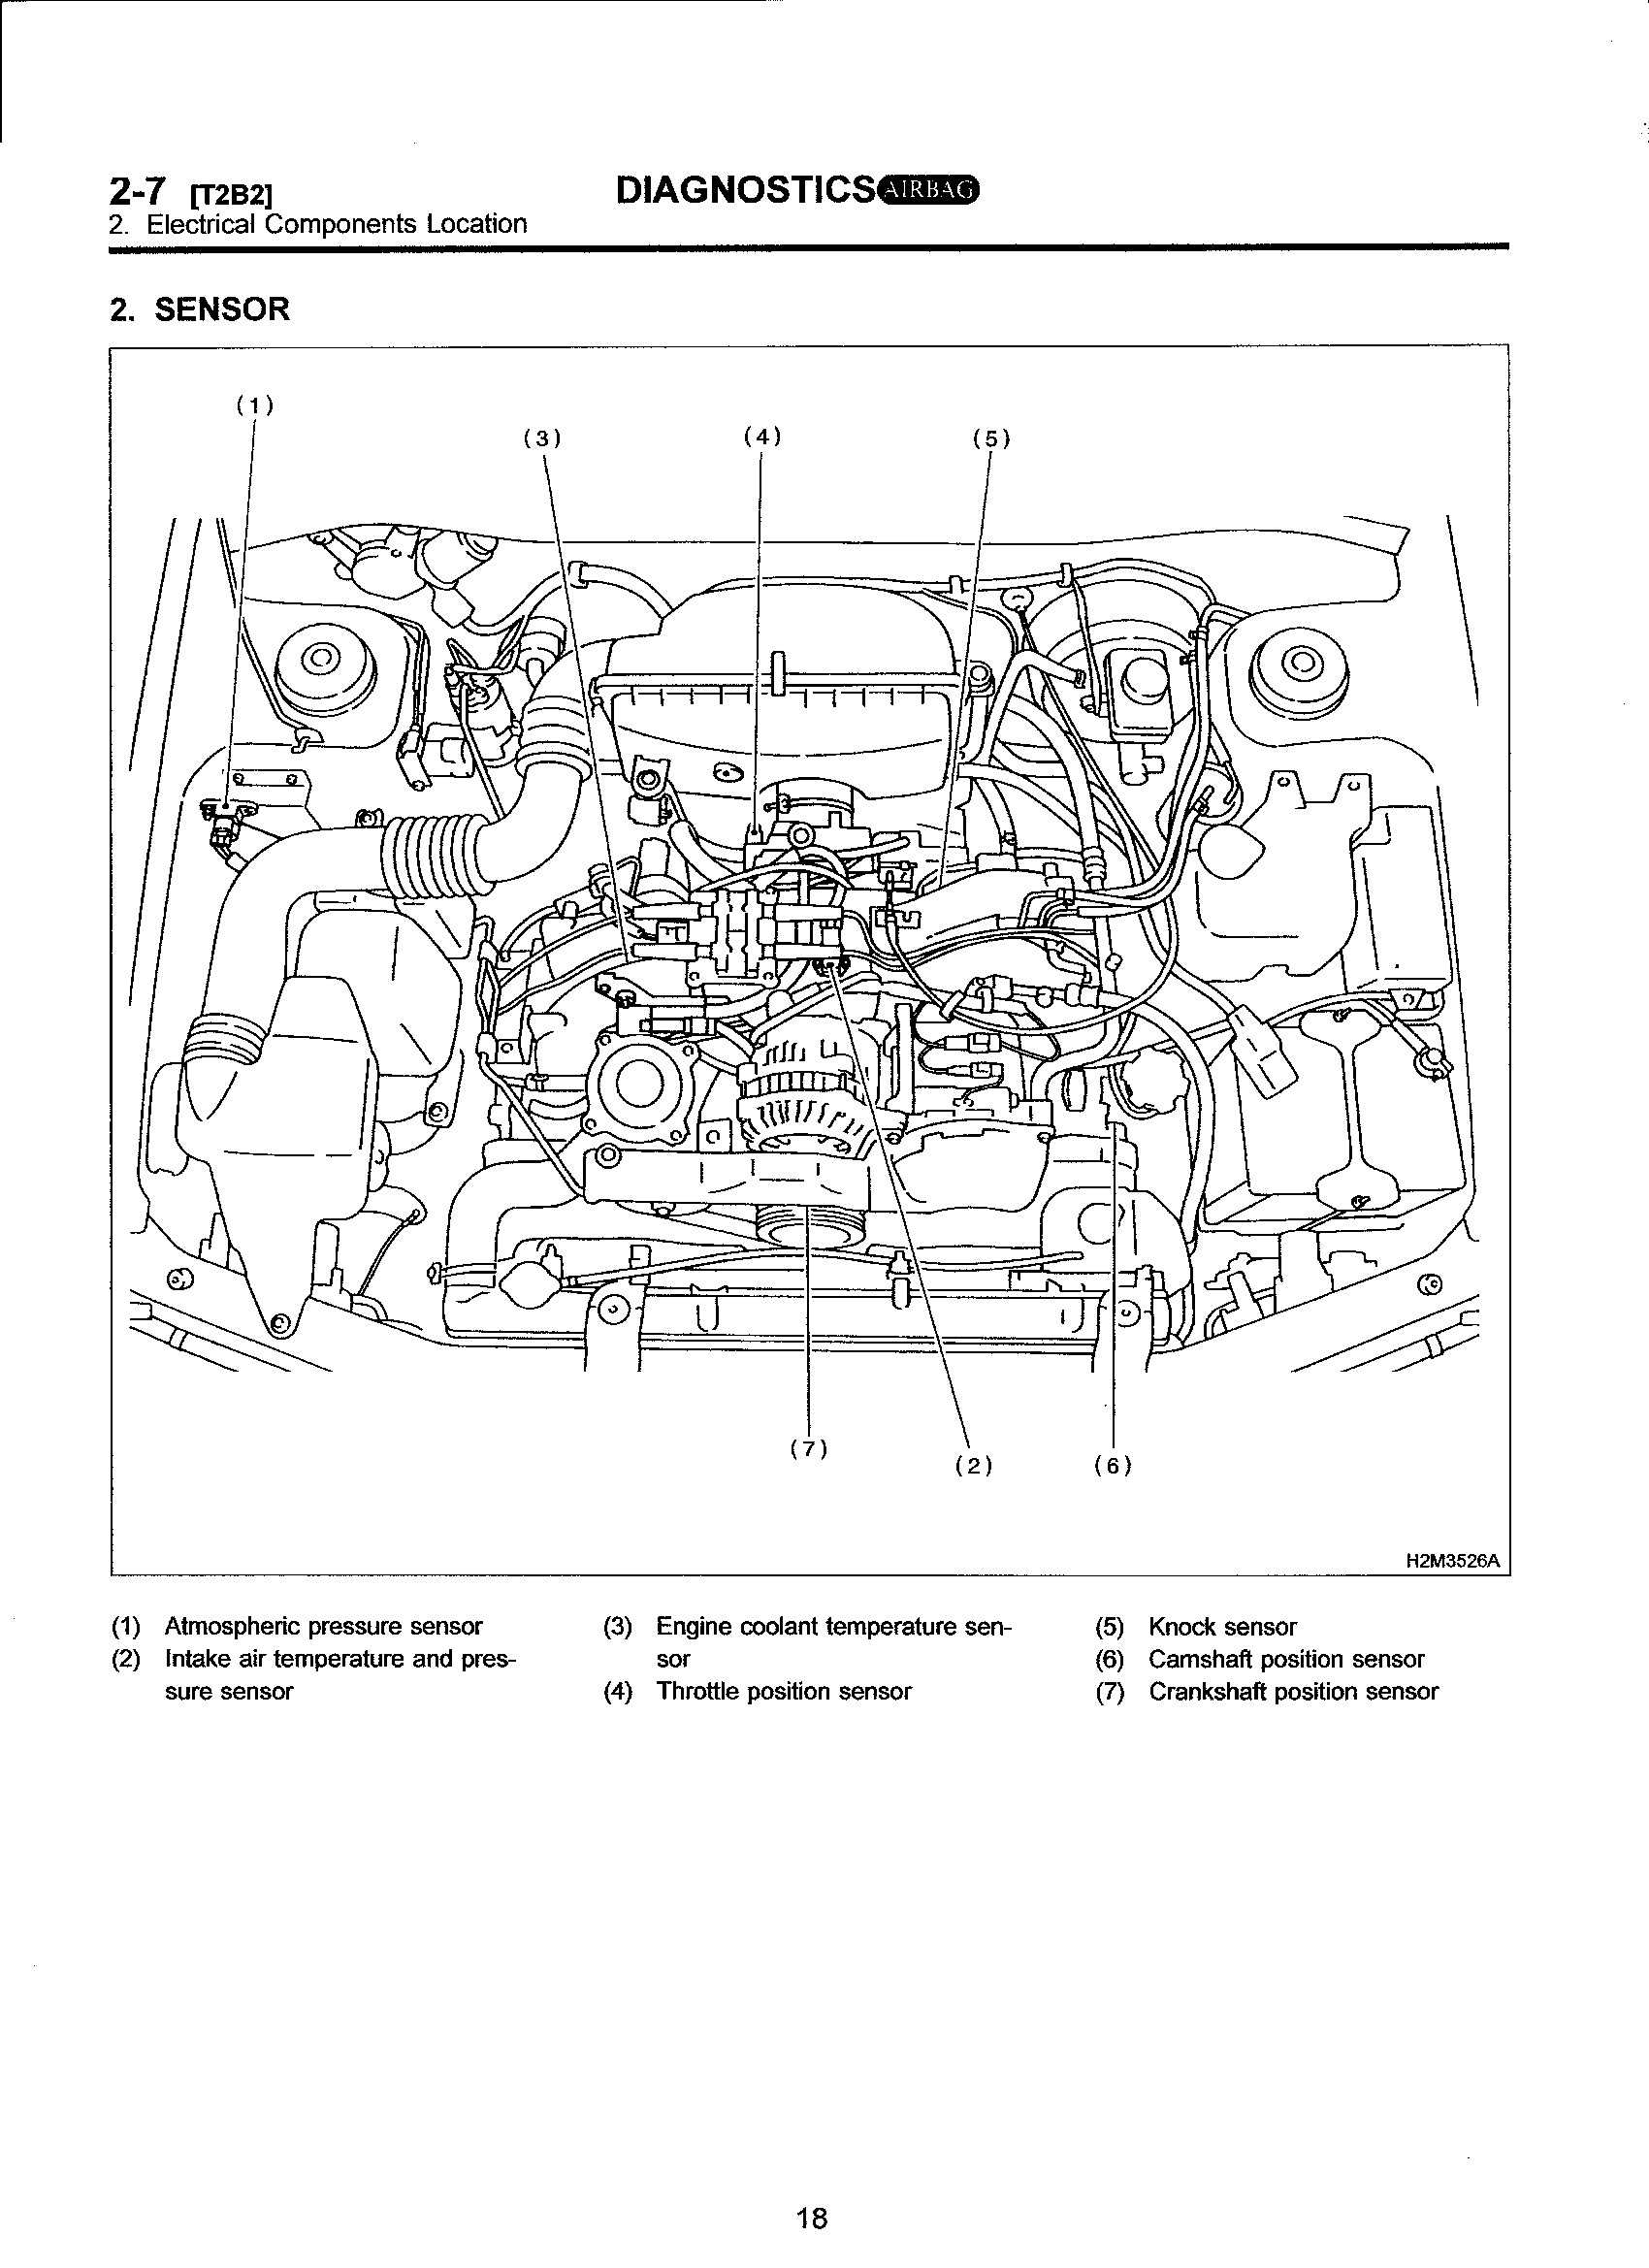 2007 Subaru forester Engine Diagram Subaru Wiring Diagrams Wiring Diagram for You Of 2007 Subaru forester Engine Diagram